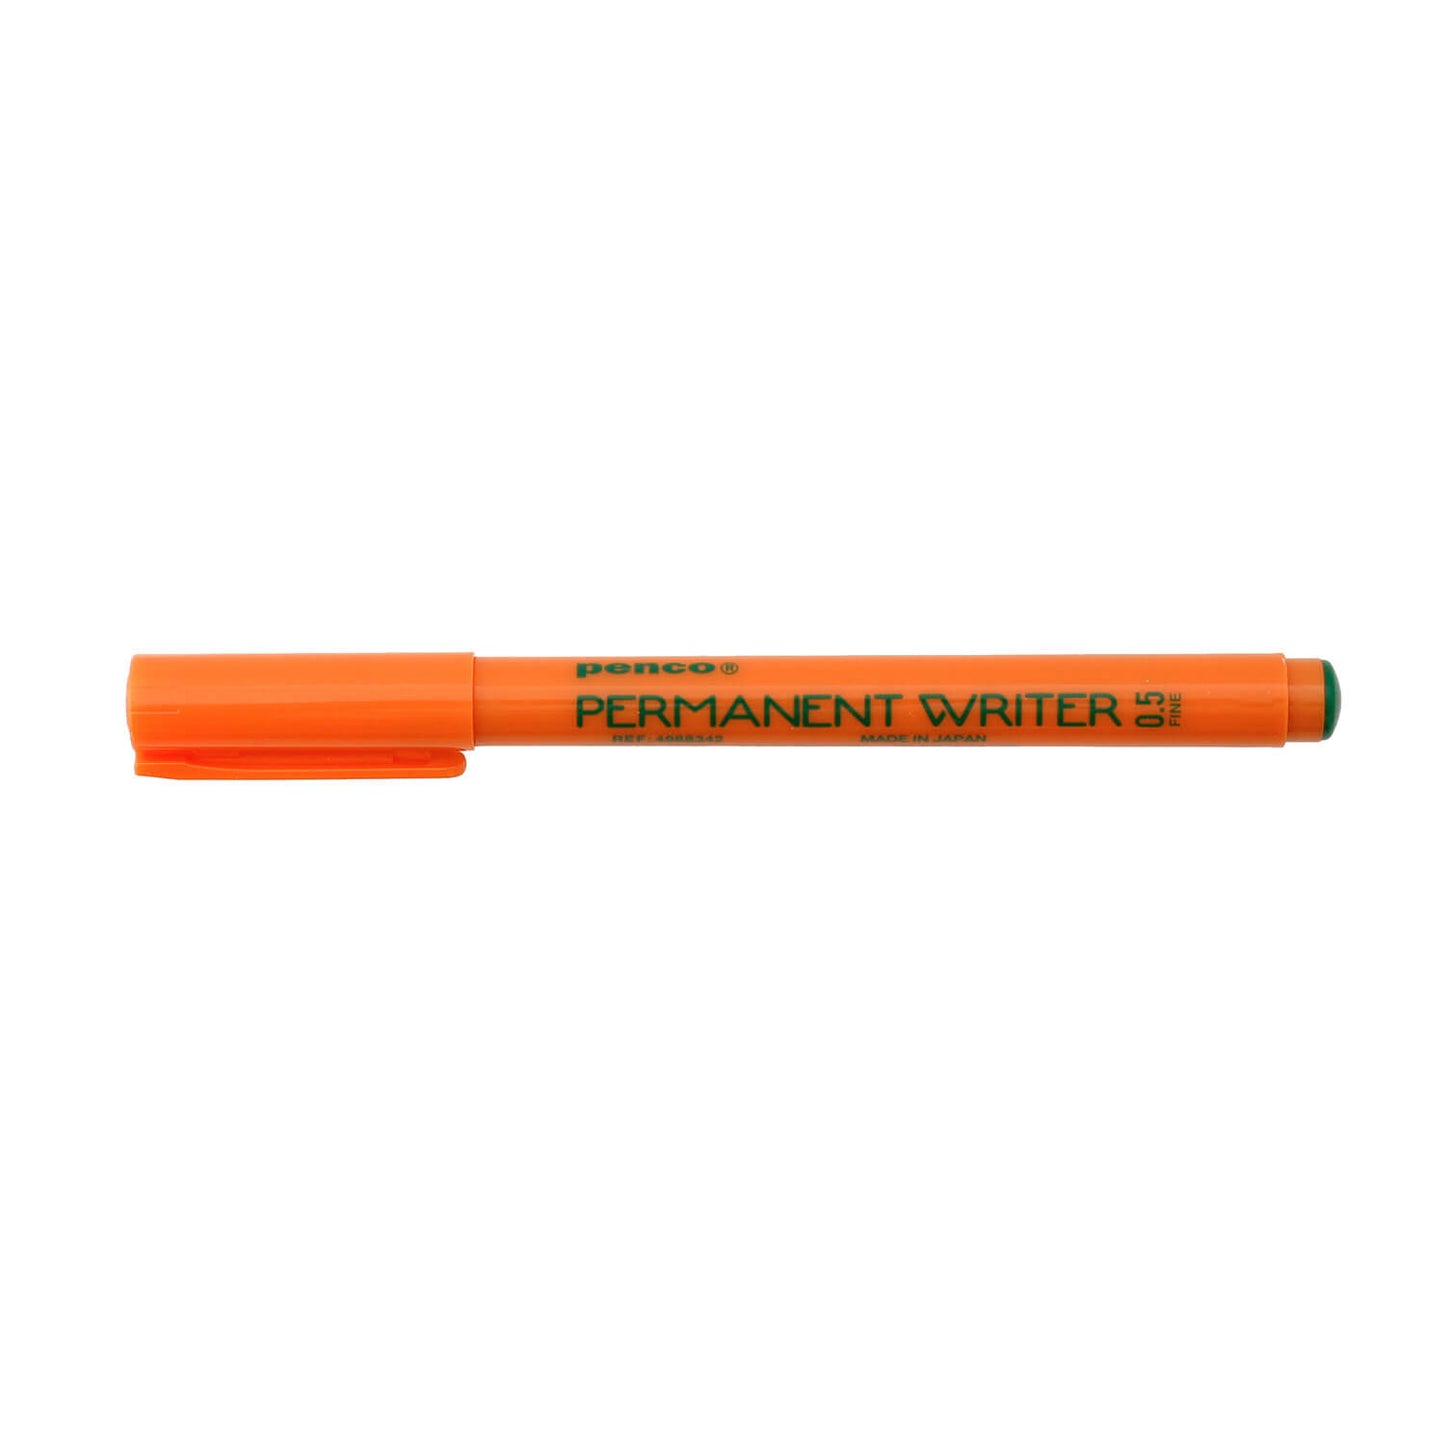 Permanent Writer Pen (PENCO)